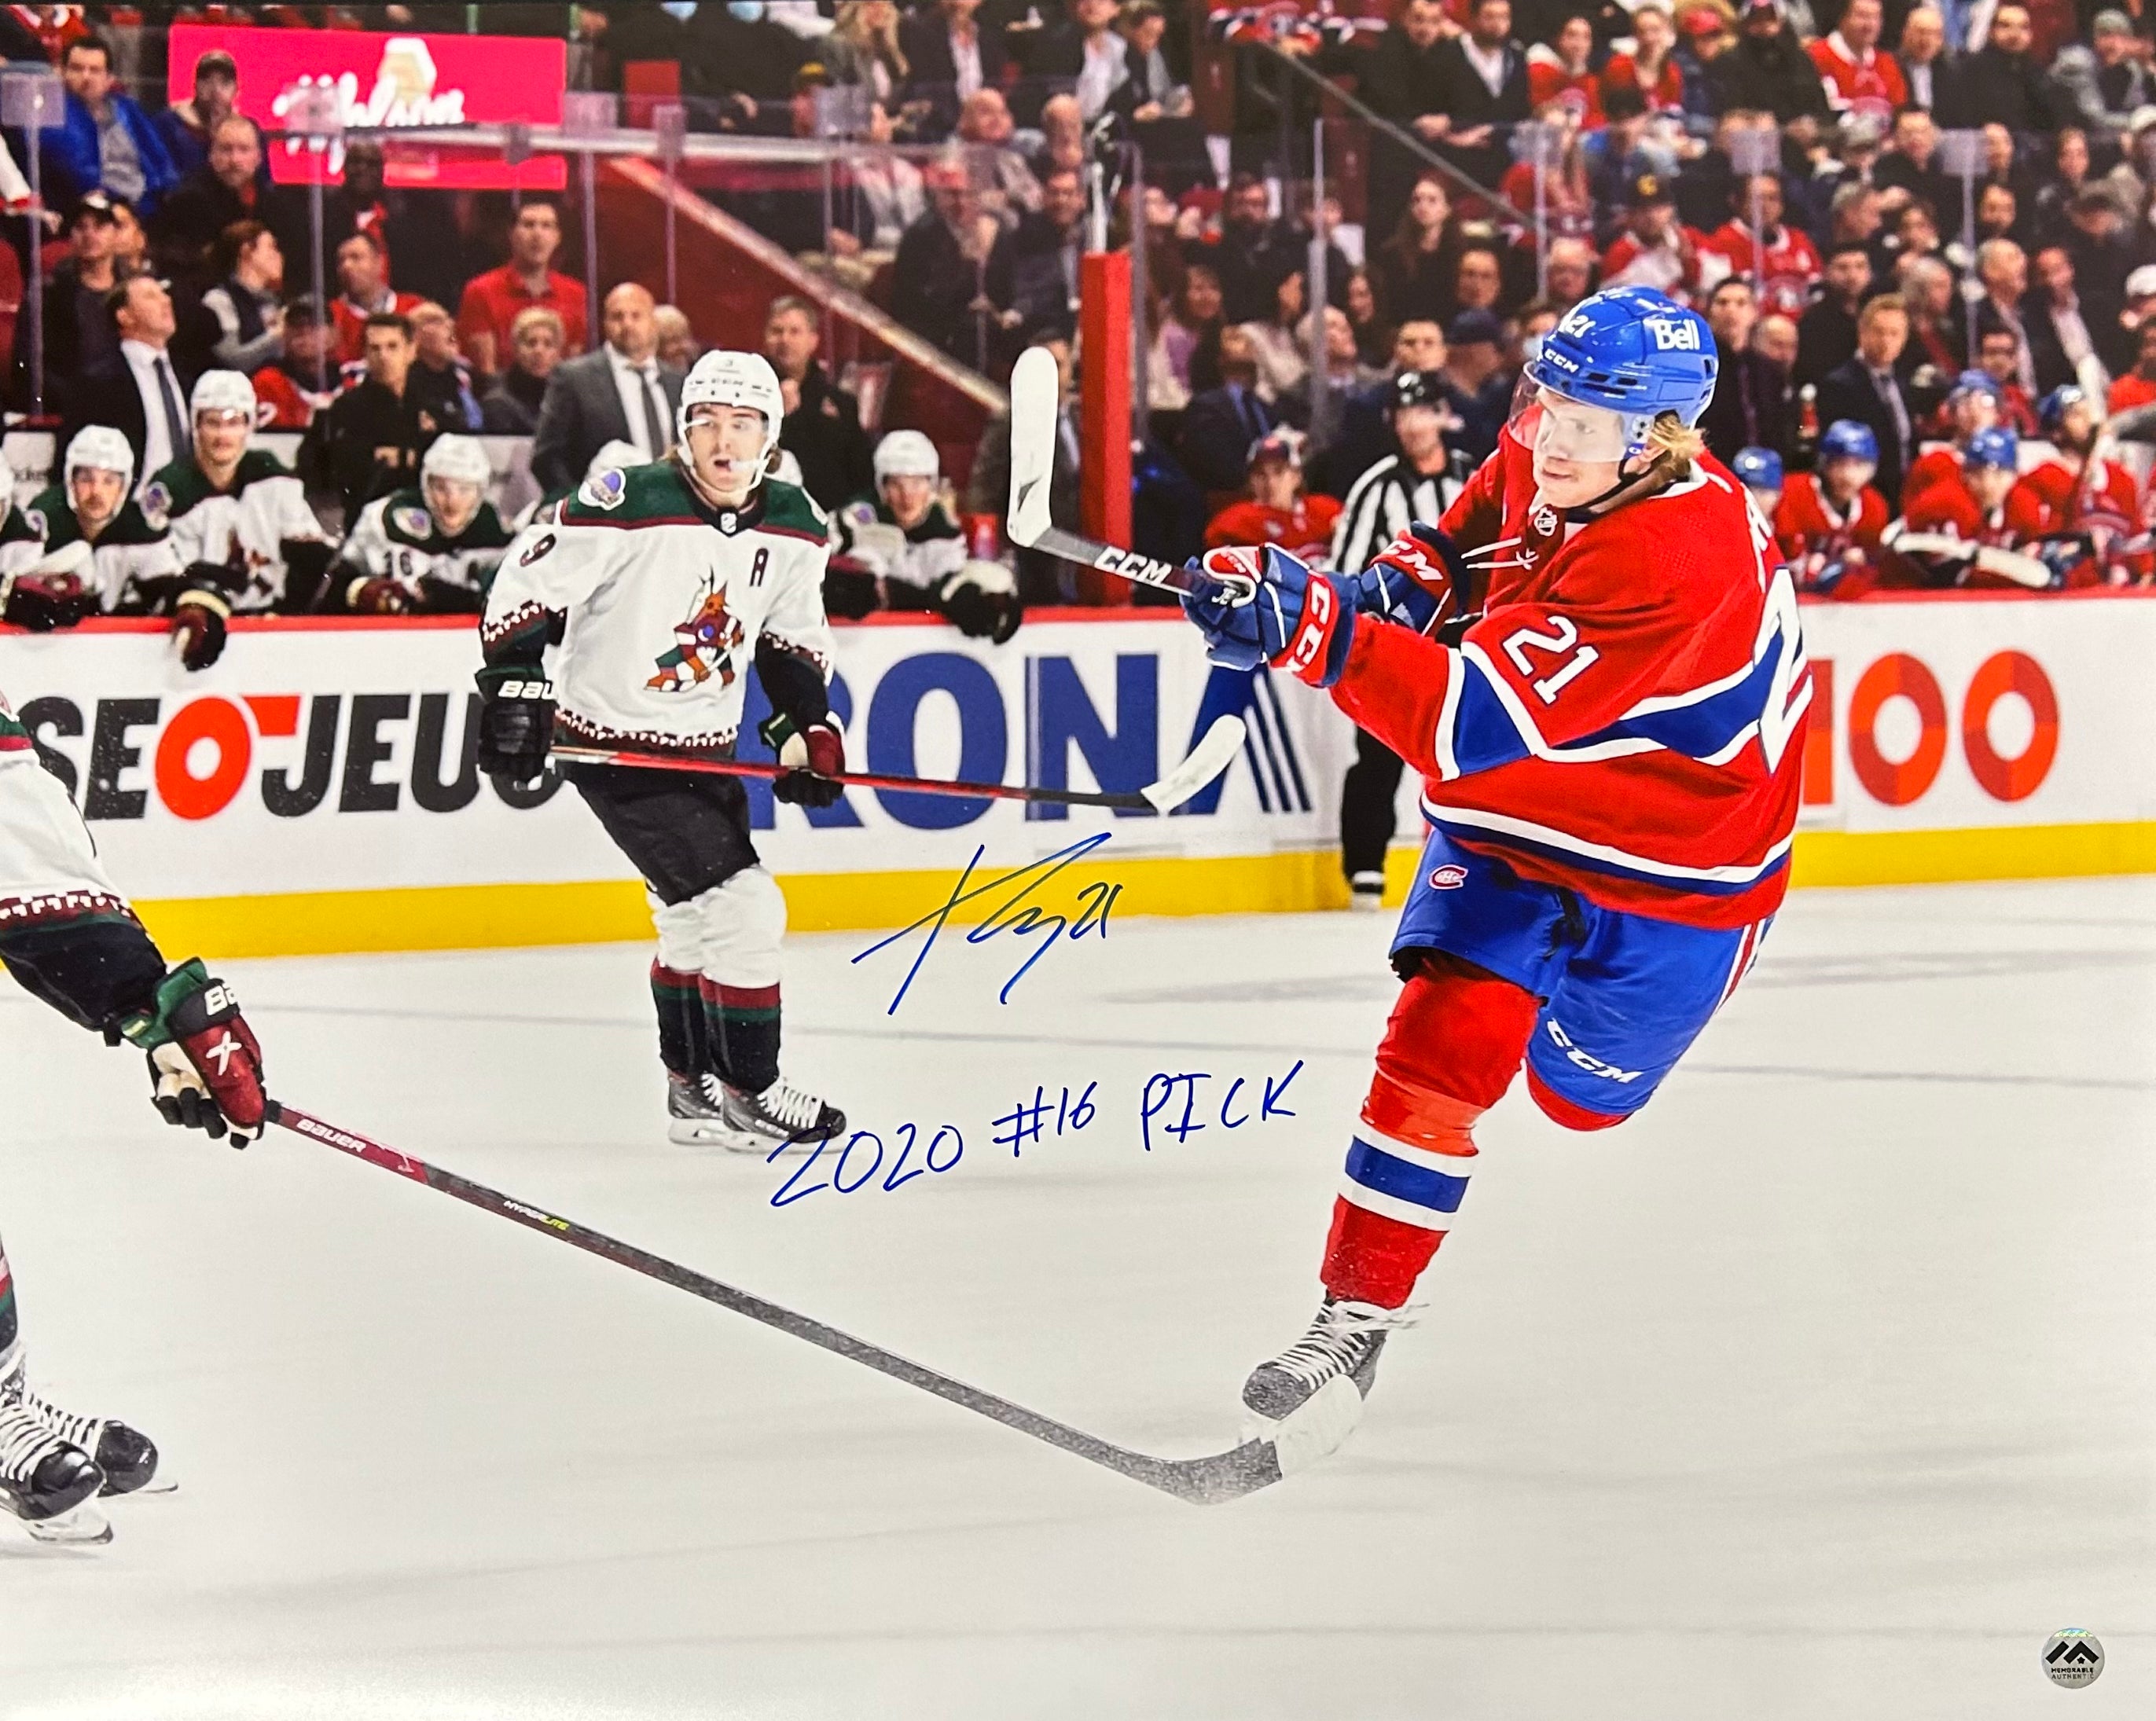 Serge Savard Montreal Canadiens 8x10 Photo